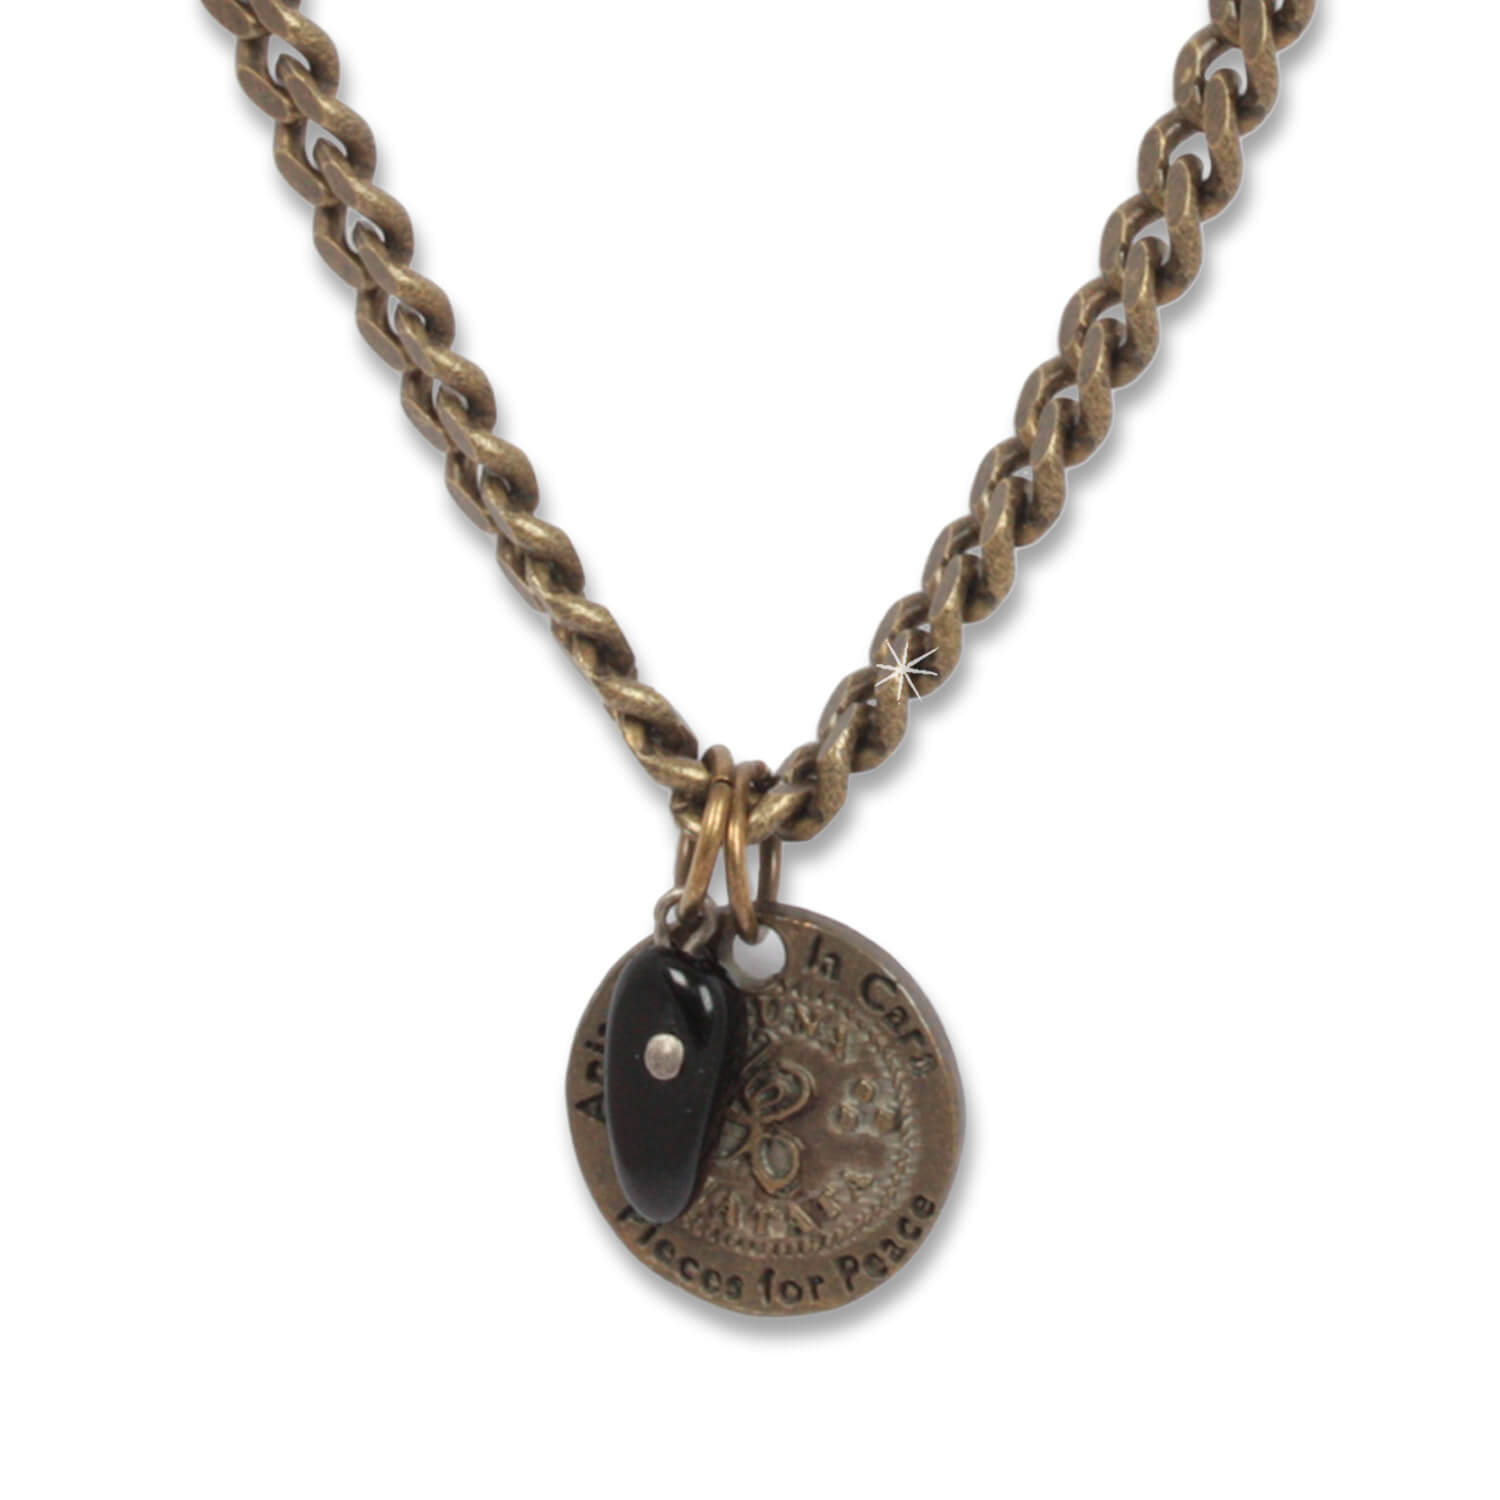 Little Coin - Hakuna Matata men's necklace Antique Bronze with onyx, 43 cm long